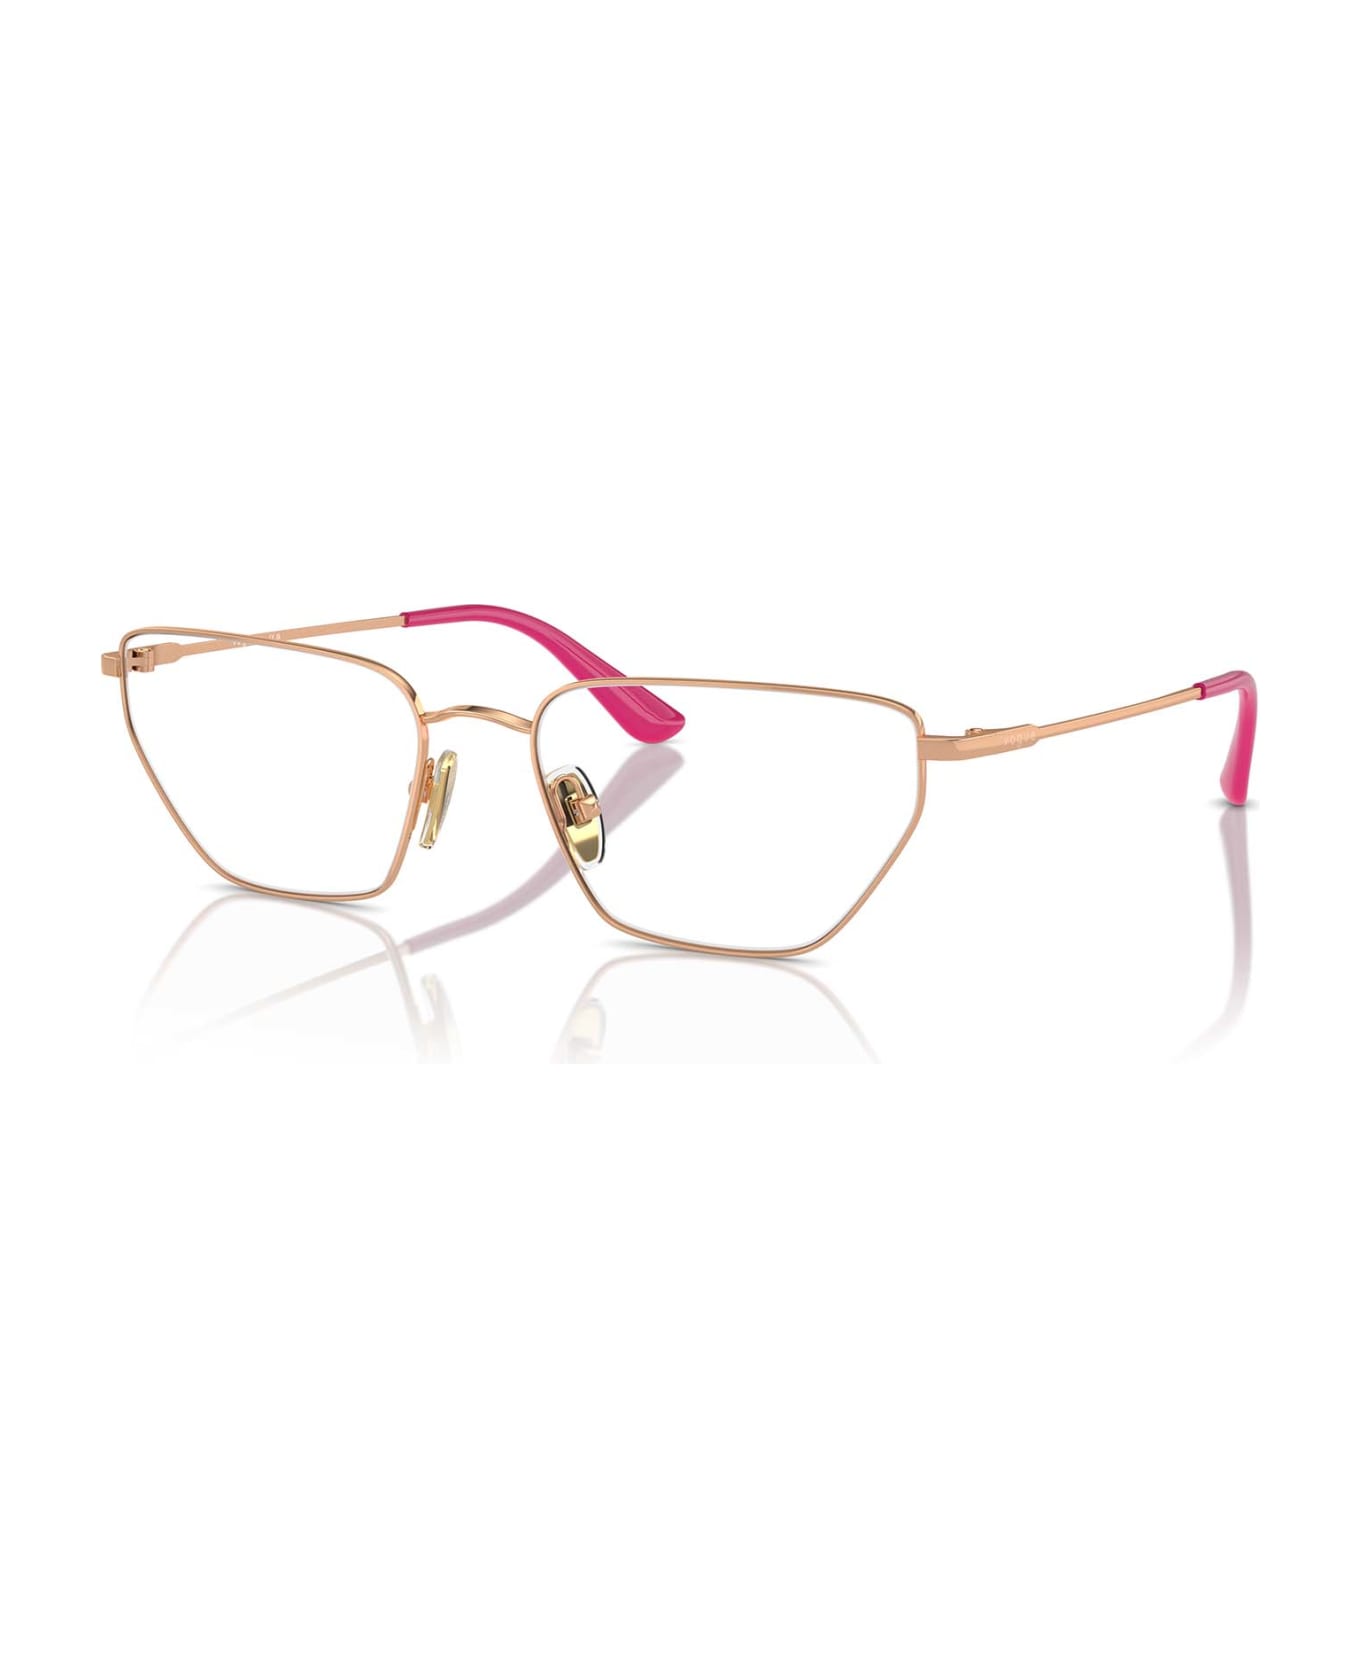 Vogue Eyewear Vo4317 Rose Gold Glasses - Rose Gold アイウェア